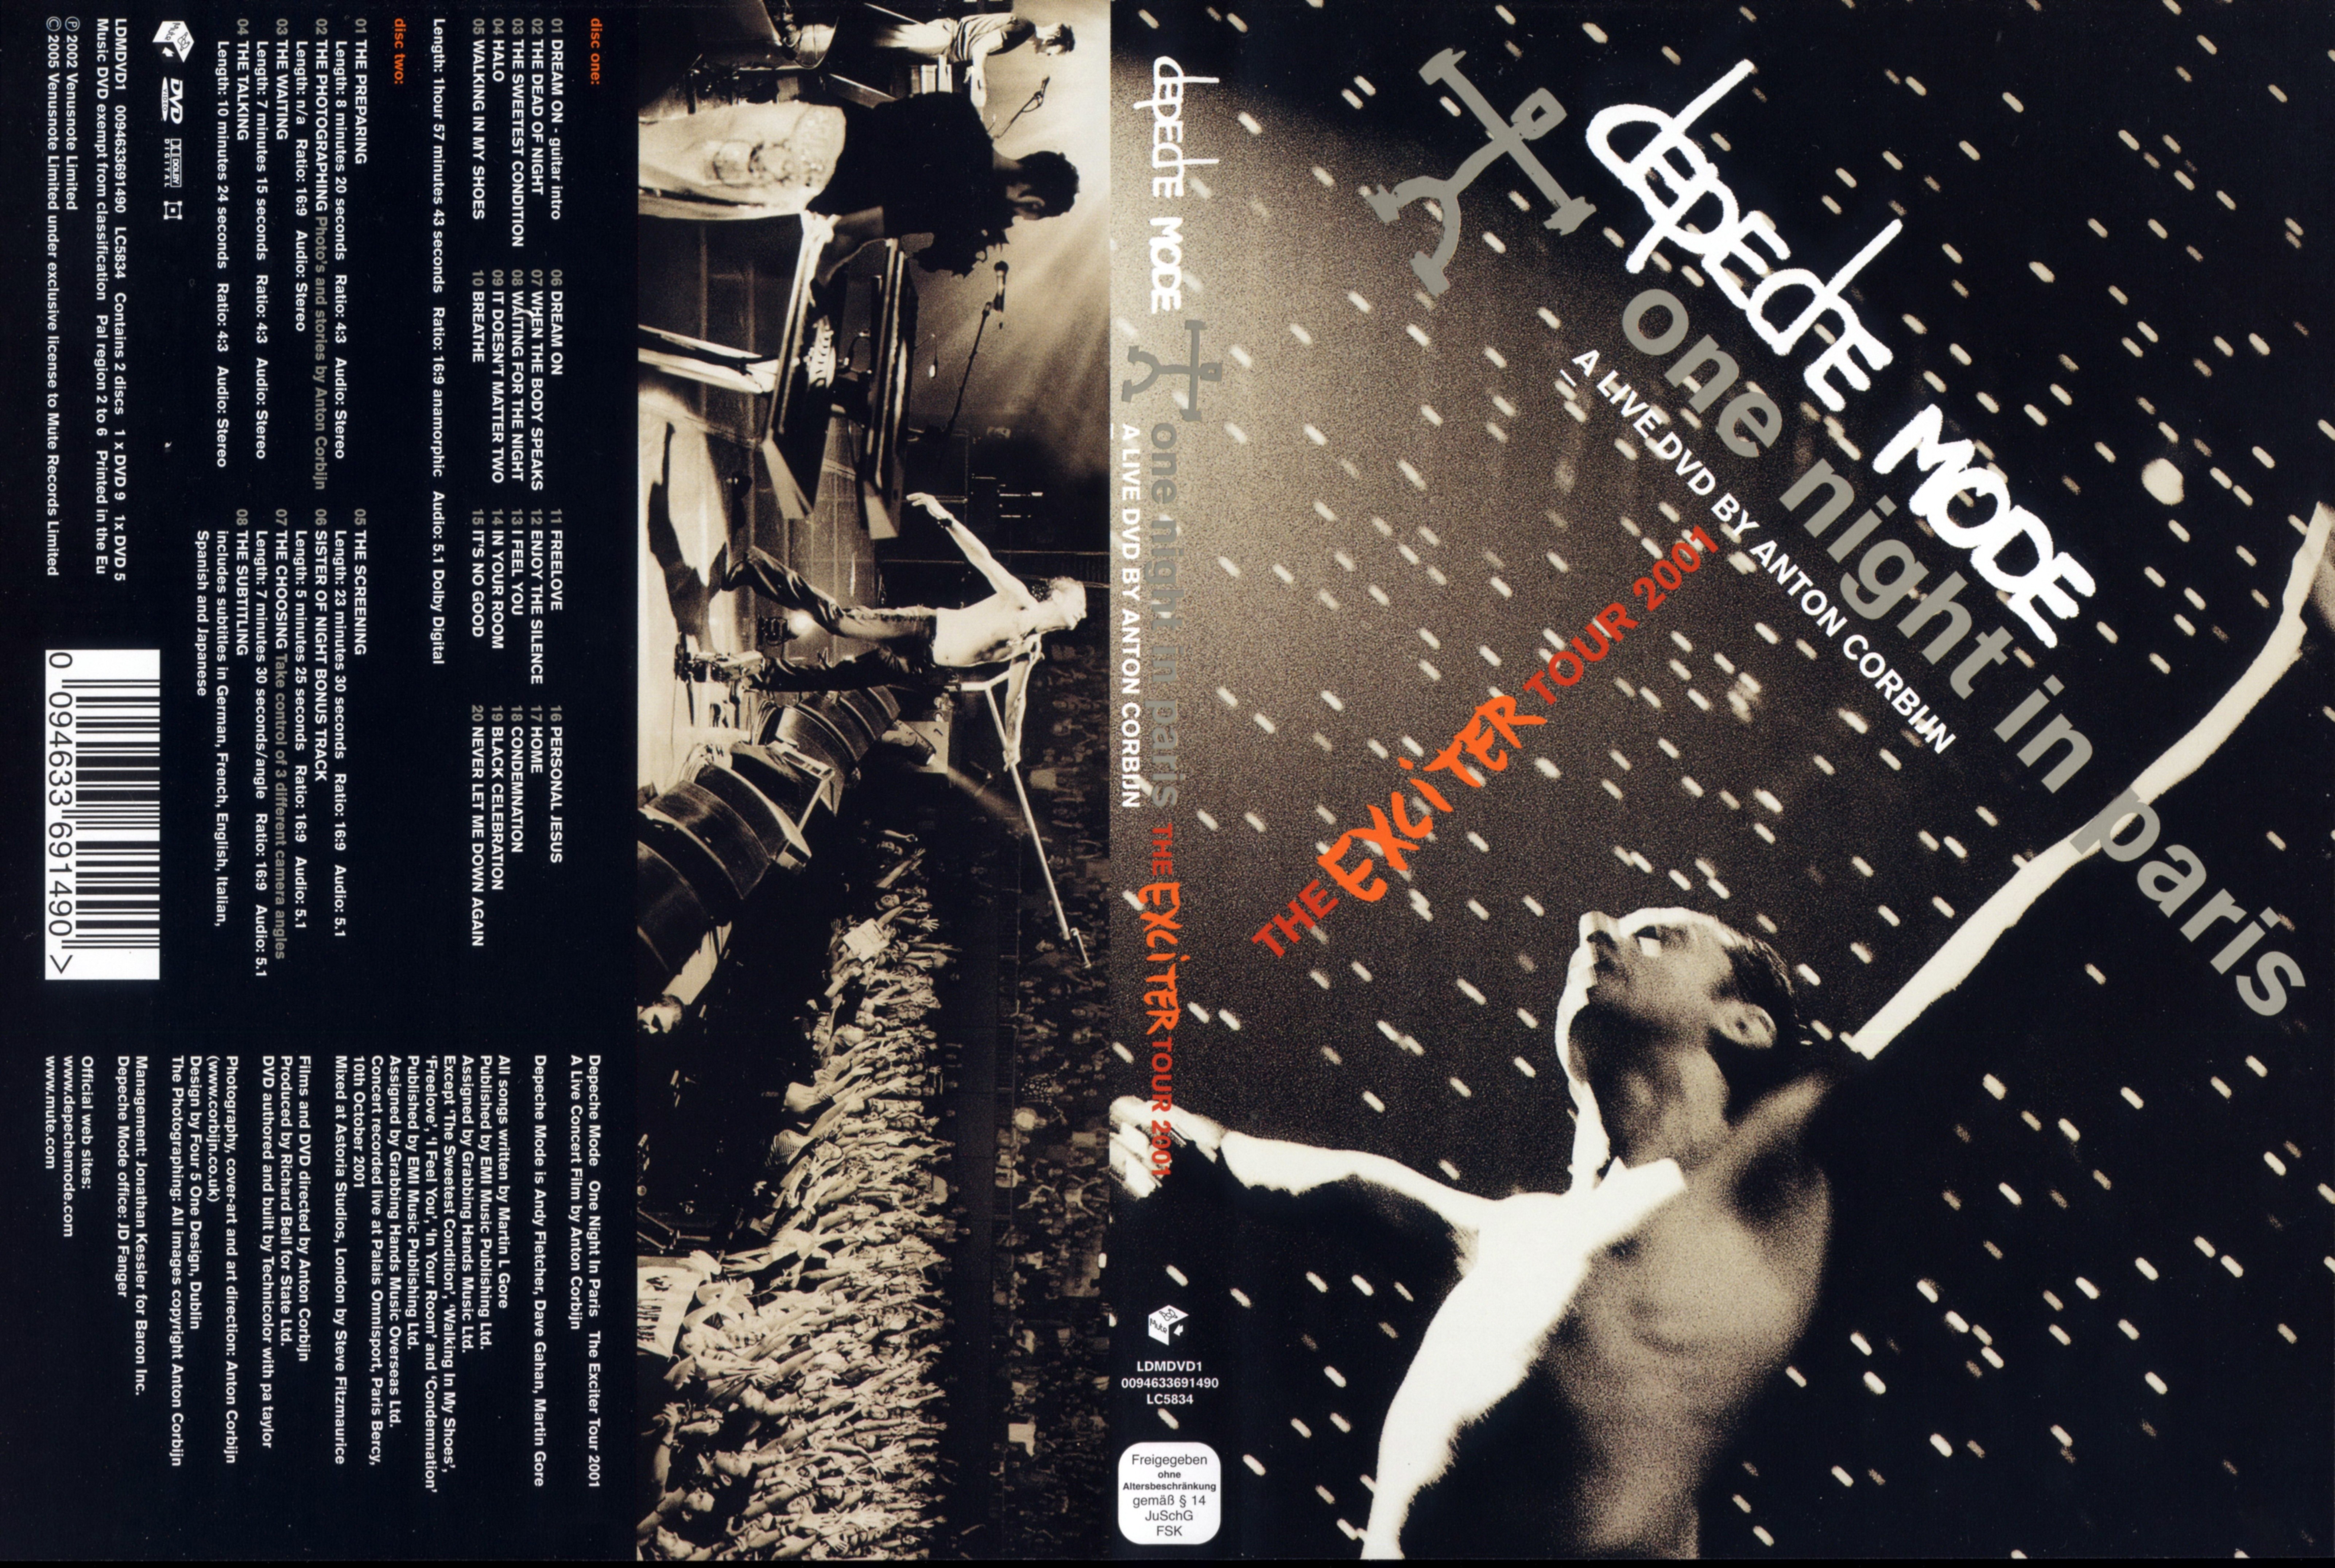 Jaquette DVD Depeche mode one night in Paris